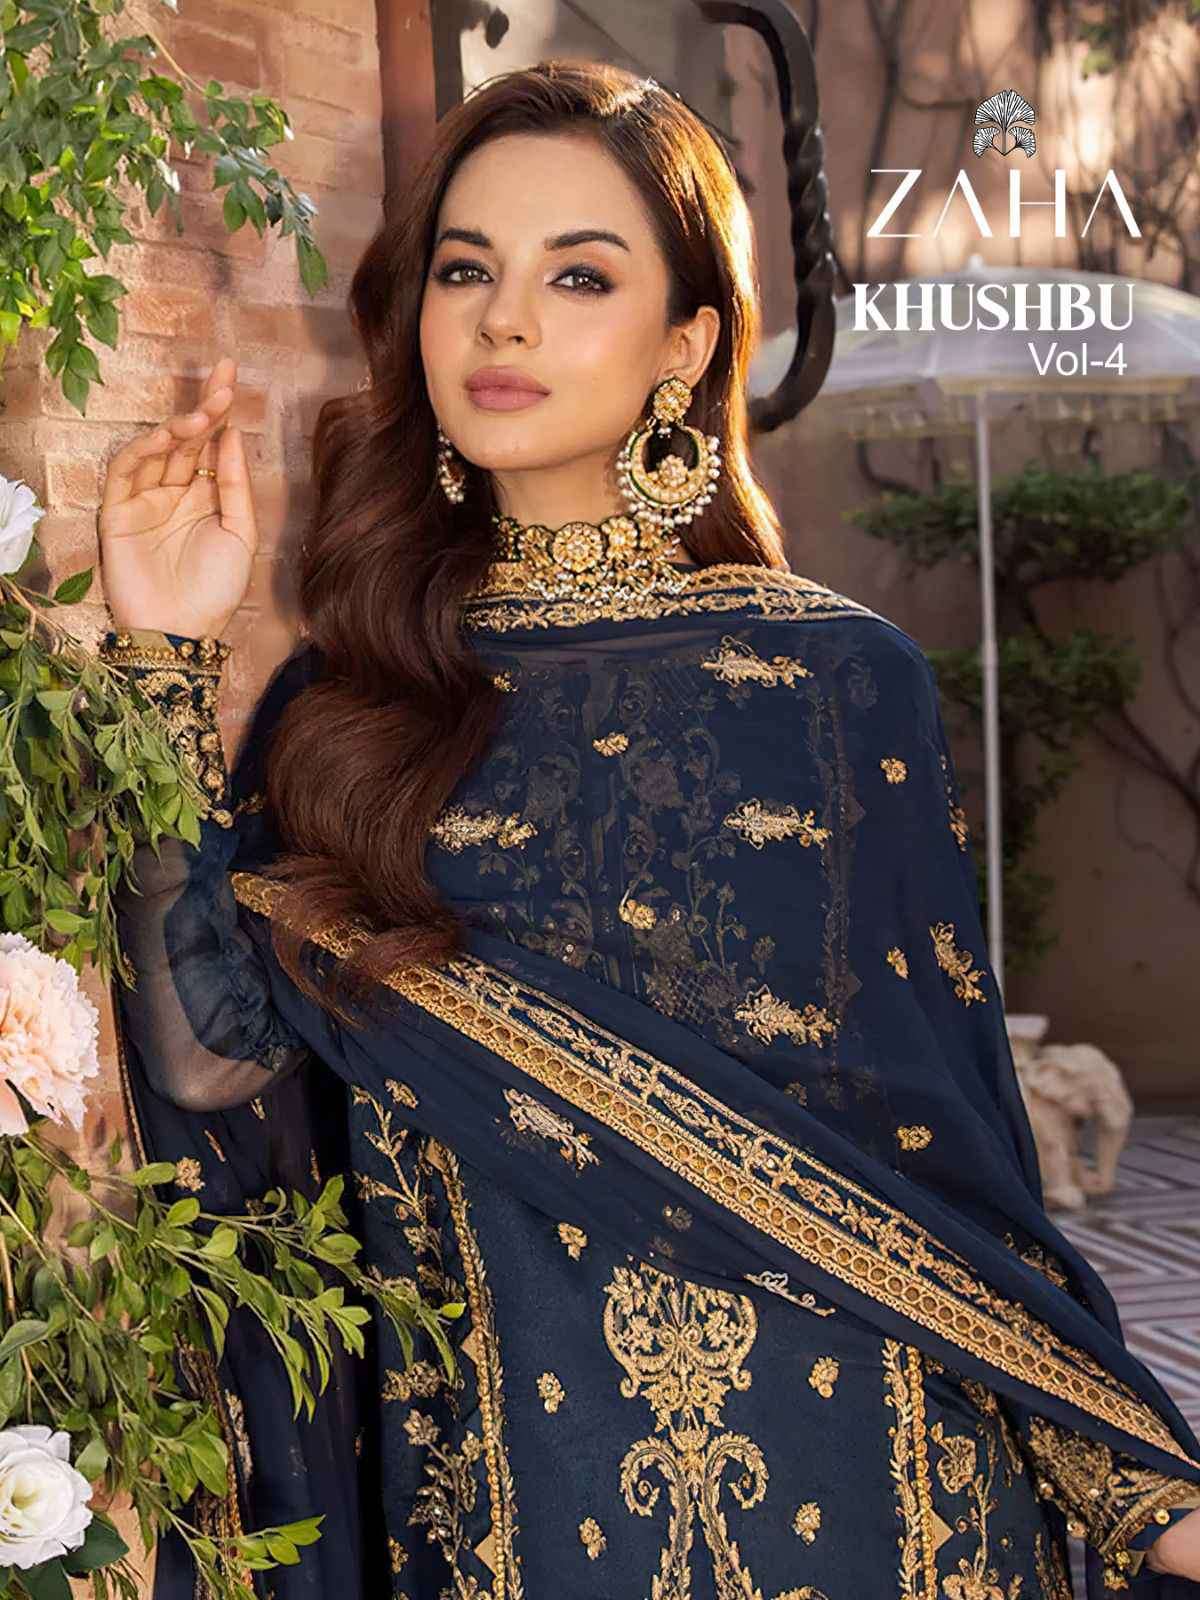 Zaha Khushbu Vol 4 Festive Collection Pakistani Suit Online Exporter